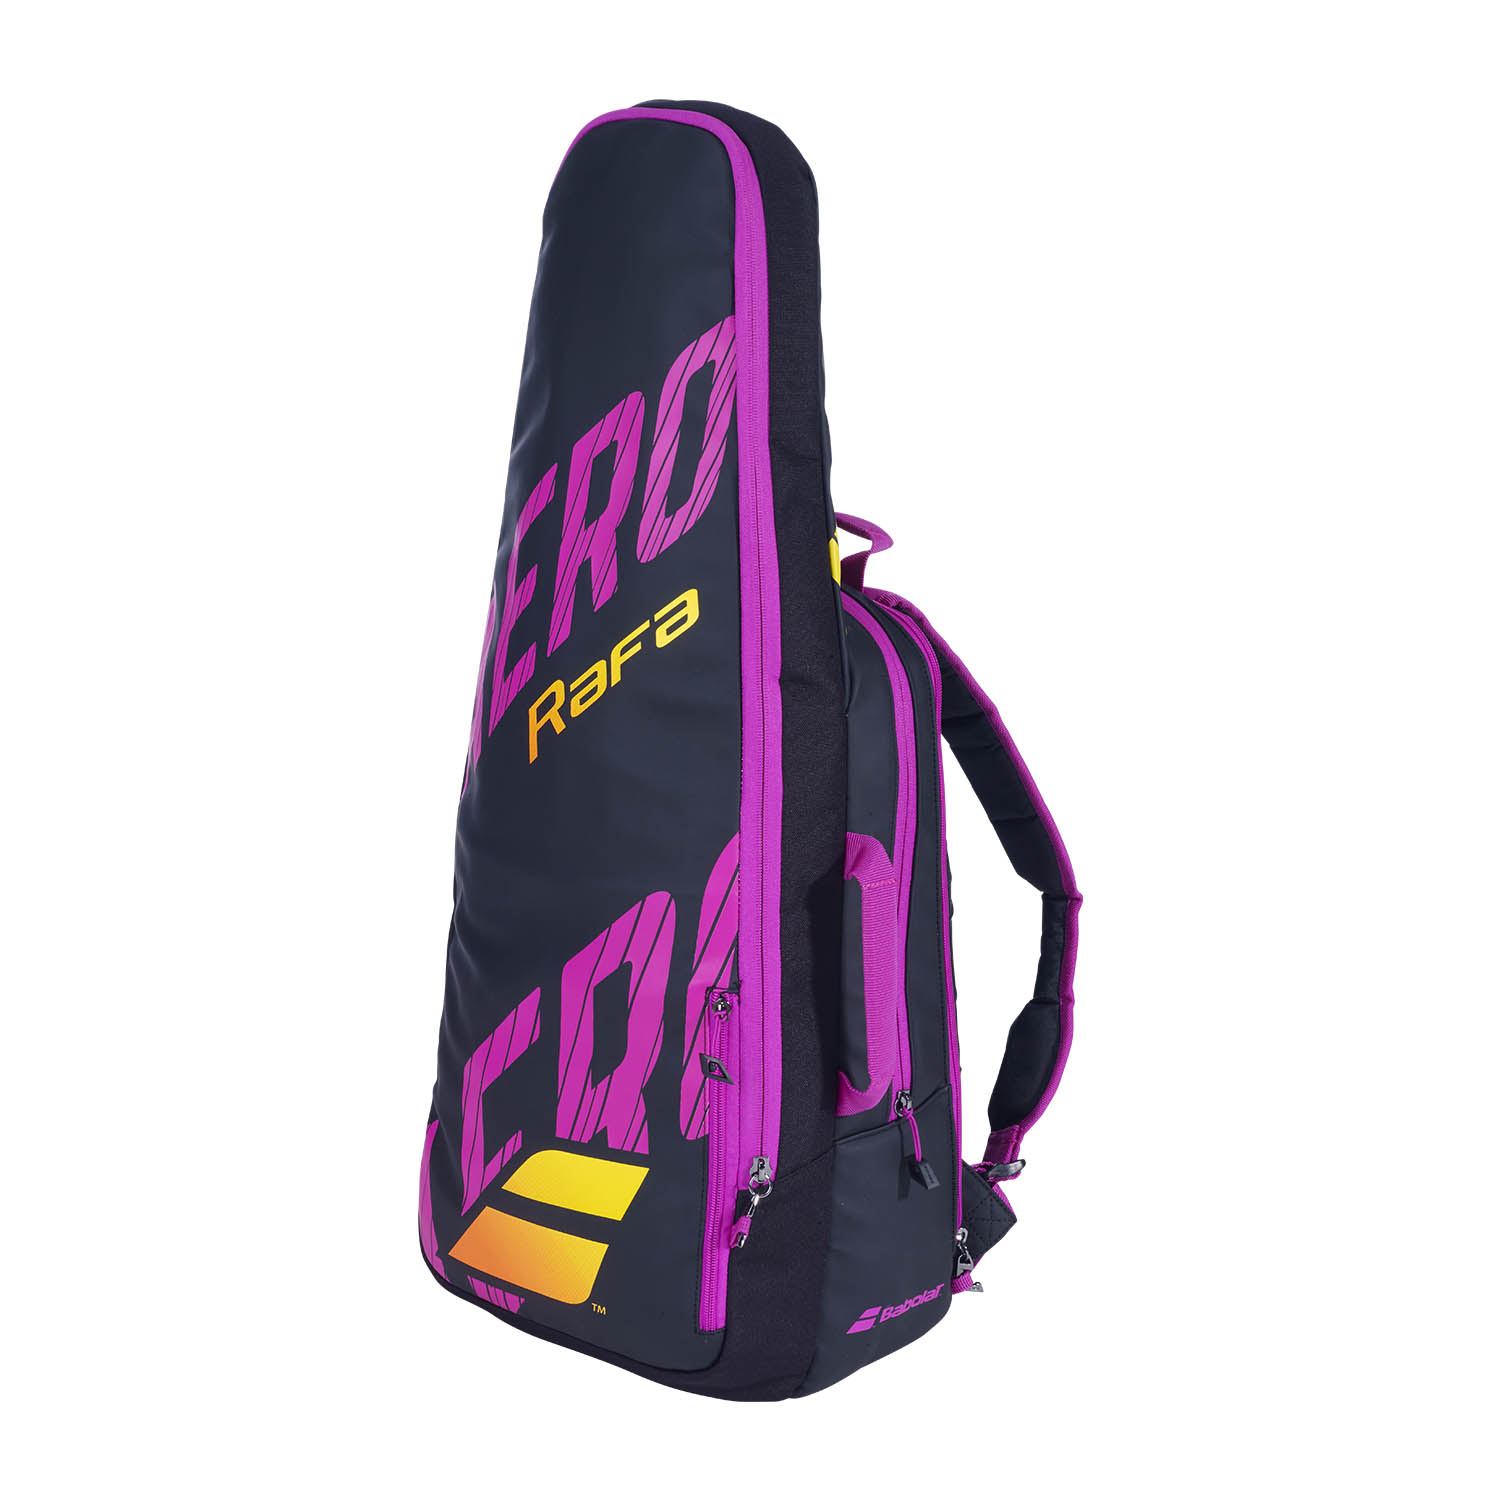 Andre steder Definere erindringsmønter Babolat Pure Aero Rafa Tennis Backpack - Black/Orange/Purple